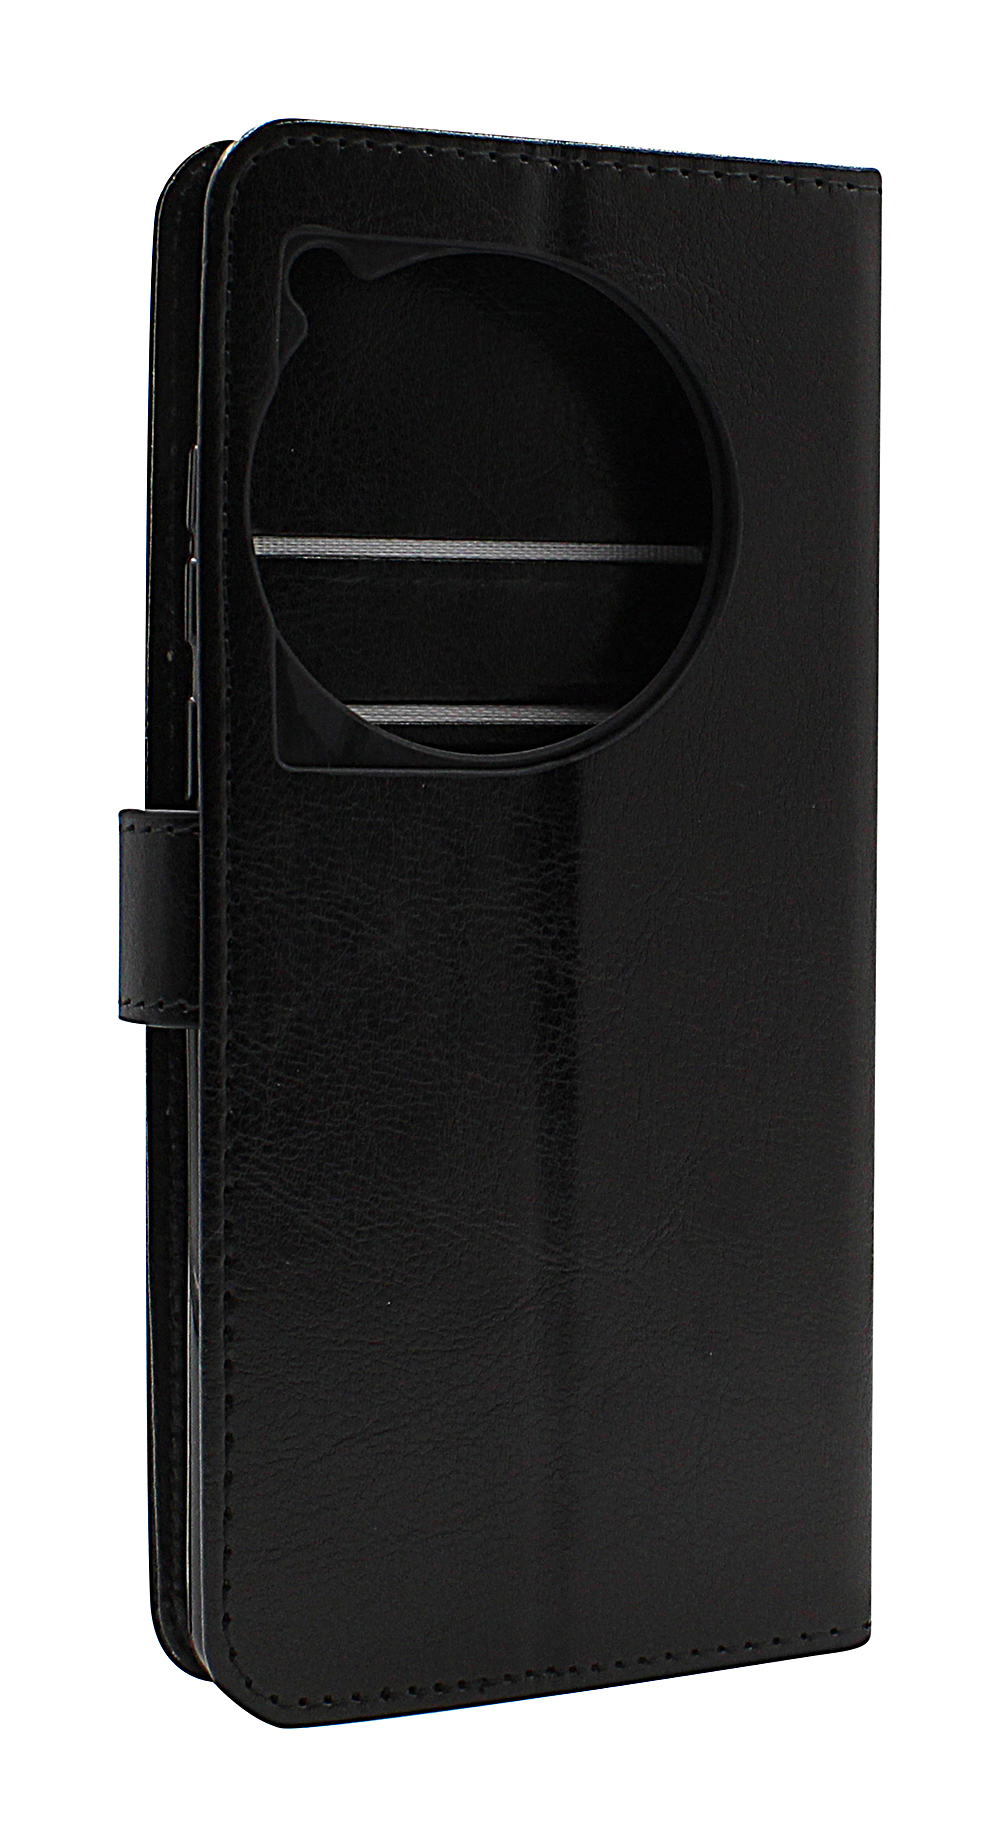 Crazy Horse Wallet OnePlus 12 5G